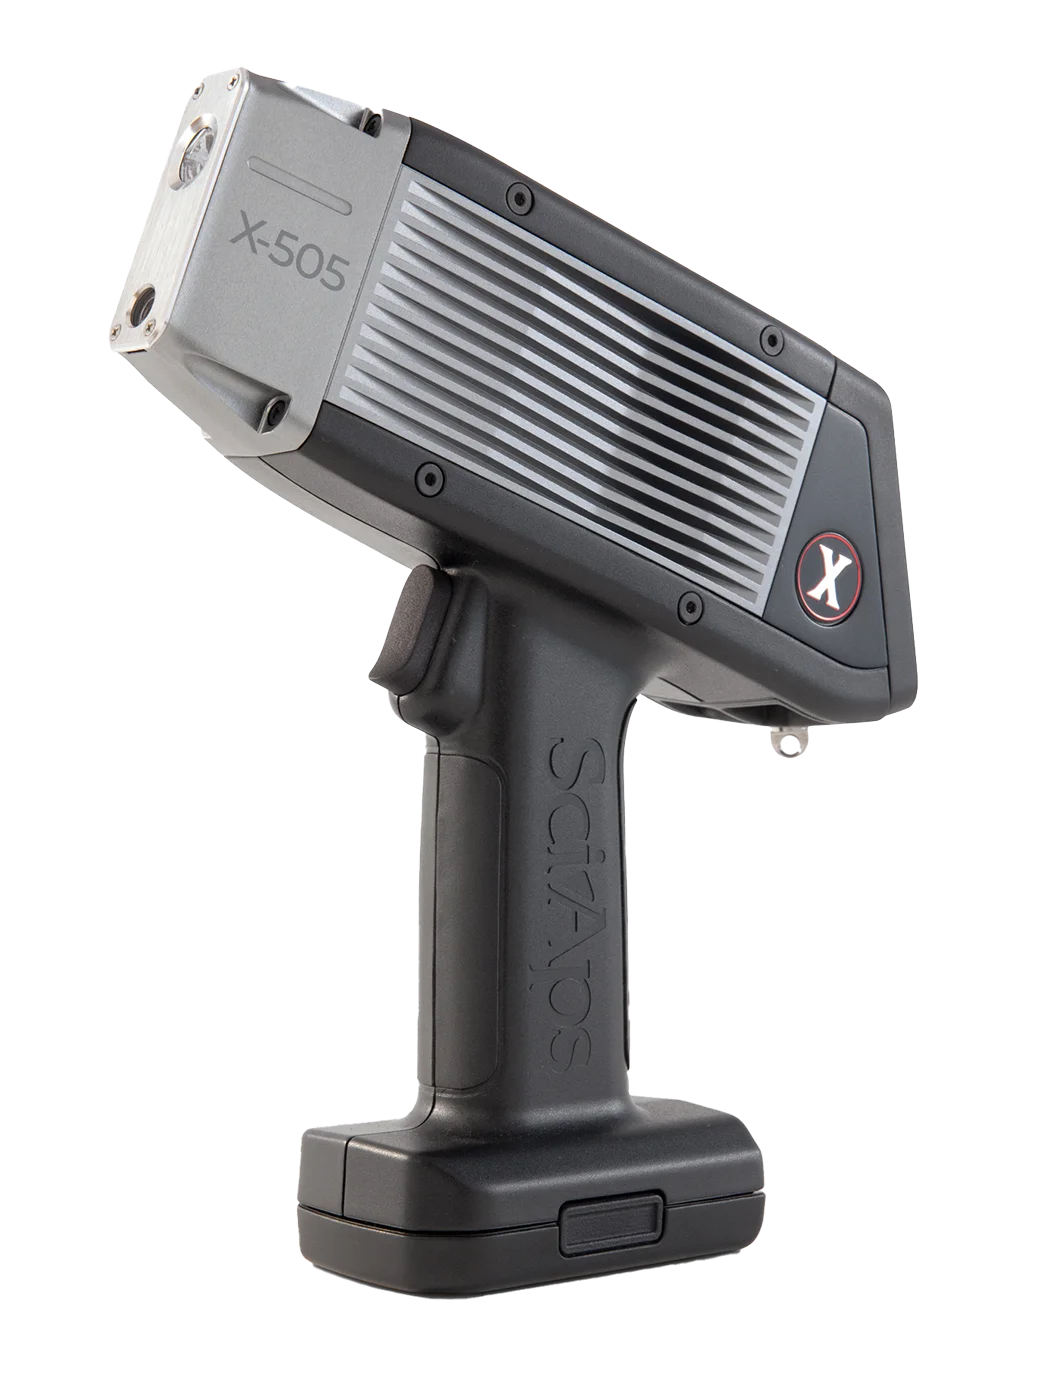 X-505 : Analyseur XRF Portable